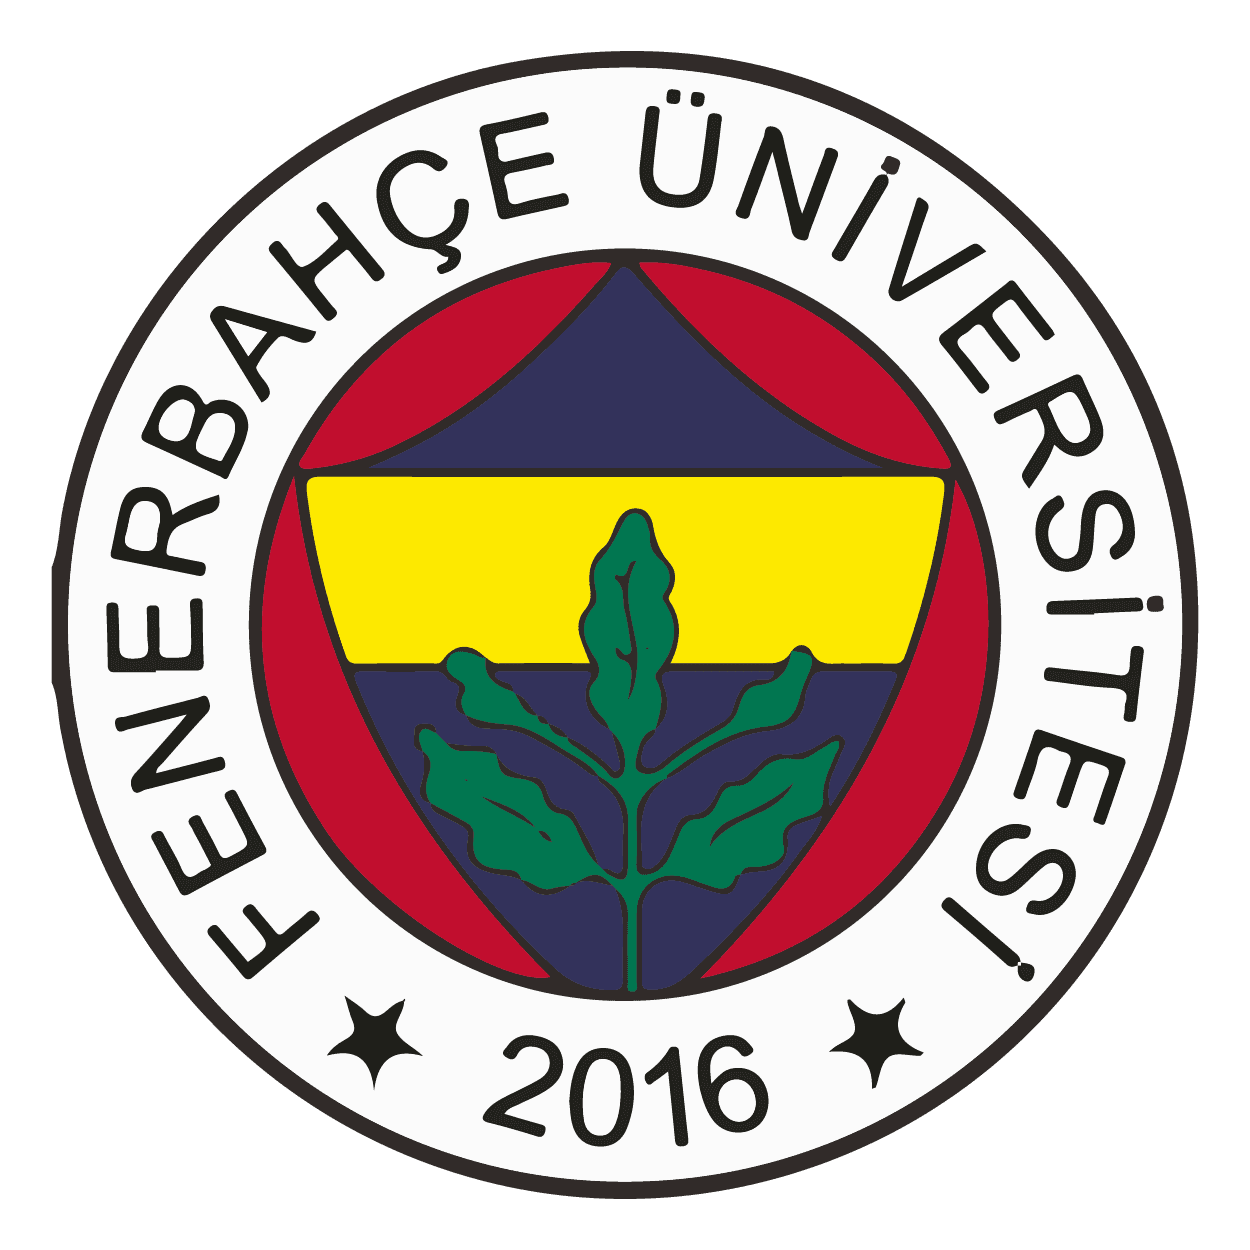 Fenerbahçe Üniversitesi Logo (İstanbul) png